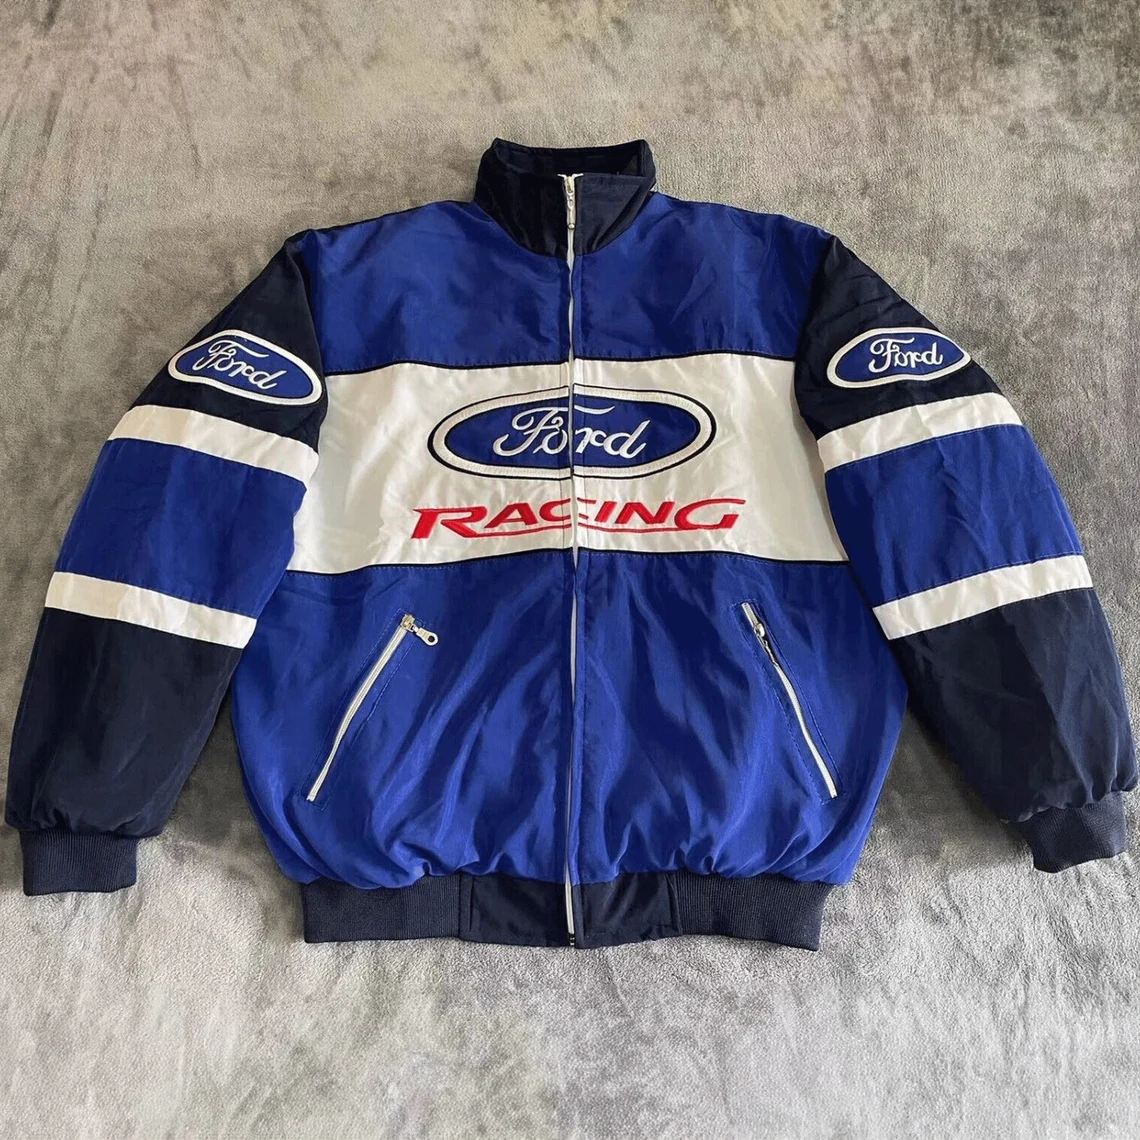 Ford Racing Jacket with Cotton,Vintage Rare F1 Bomber Jacket,90s Streetwear Embroidered Jacket,Y2K Nascar Jacket,Blue Formula one jacket